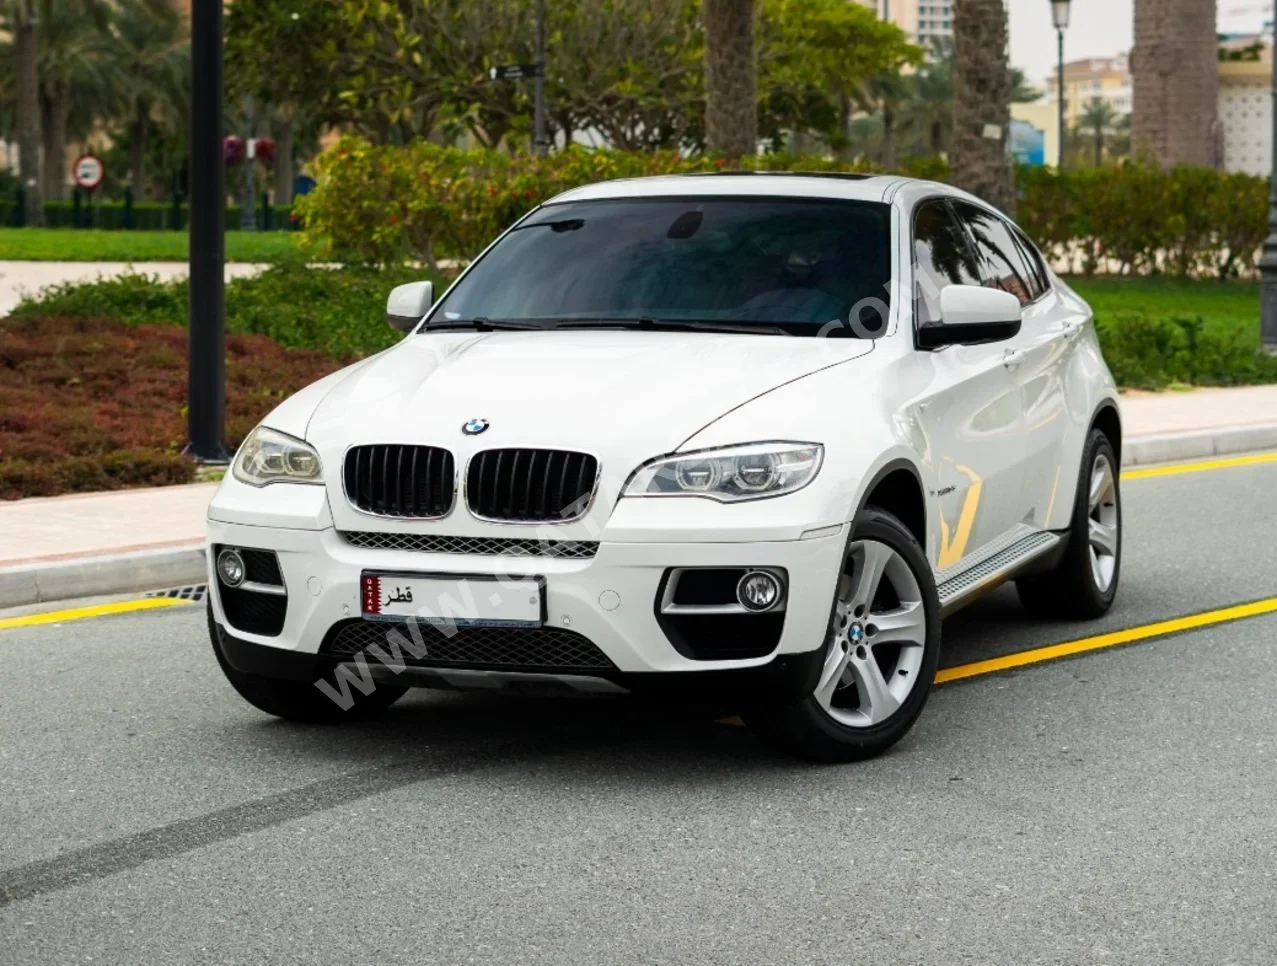 BMW  X-Series  X6  2014  Automatic  102,000 Km  6 Cylinder  Four Wheel Drive (4WD)  SUV  White